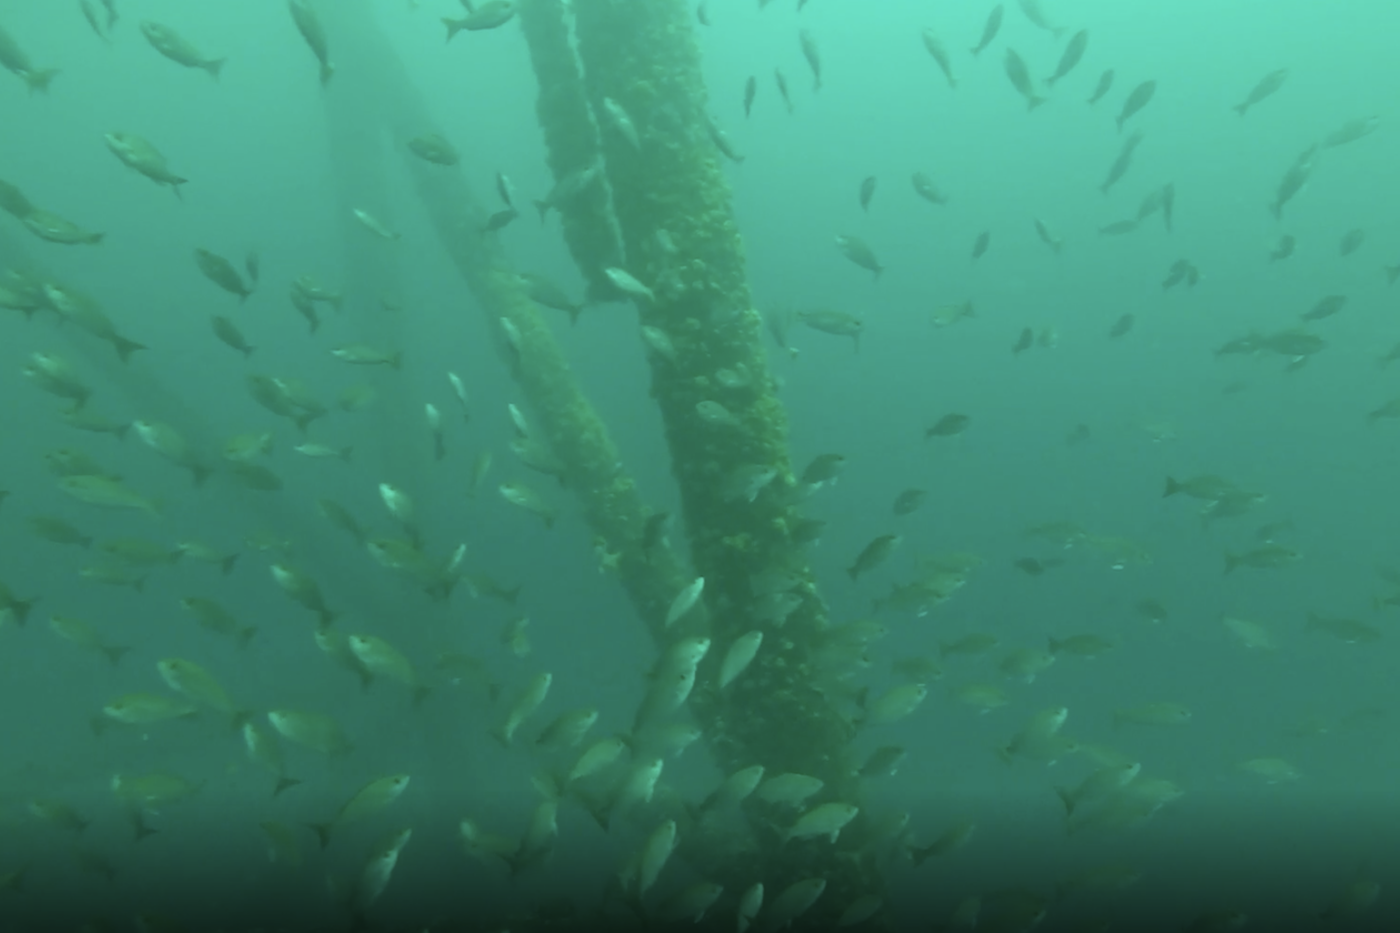 Near an oil rig underwater, fish swarm